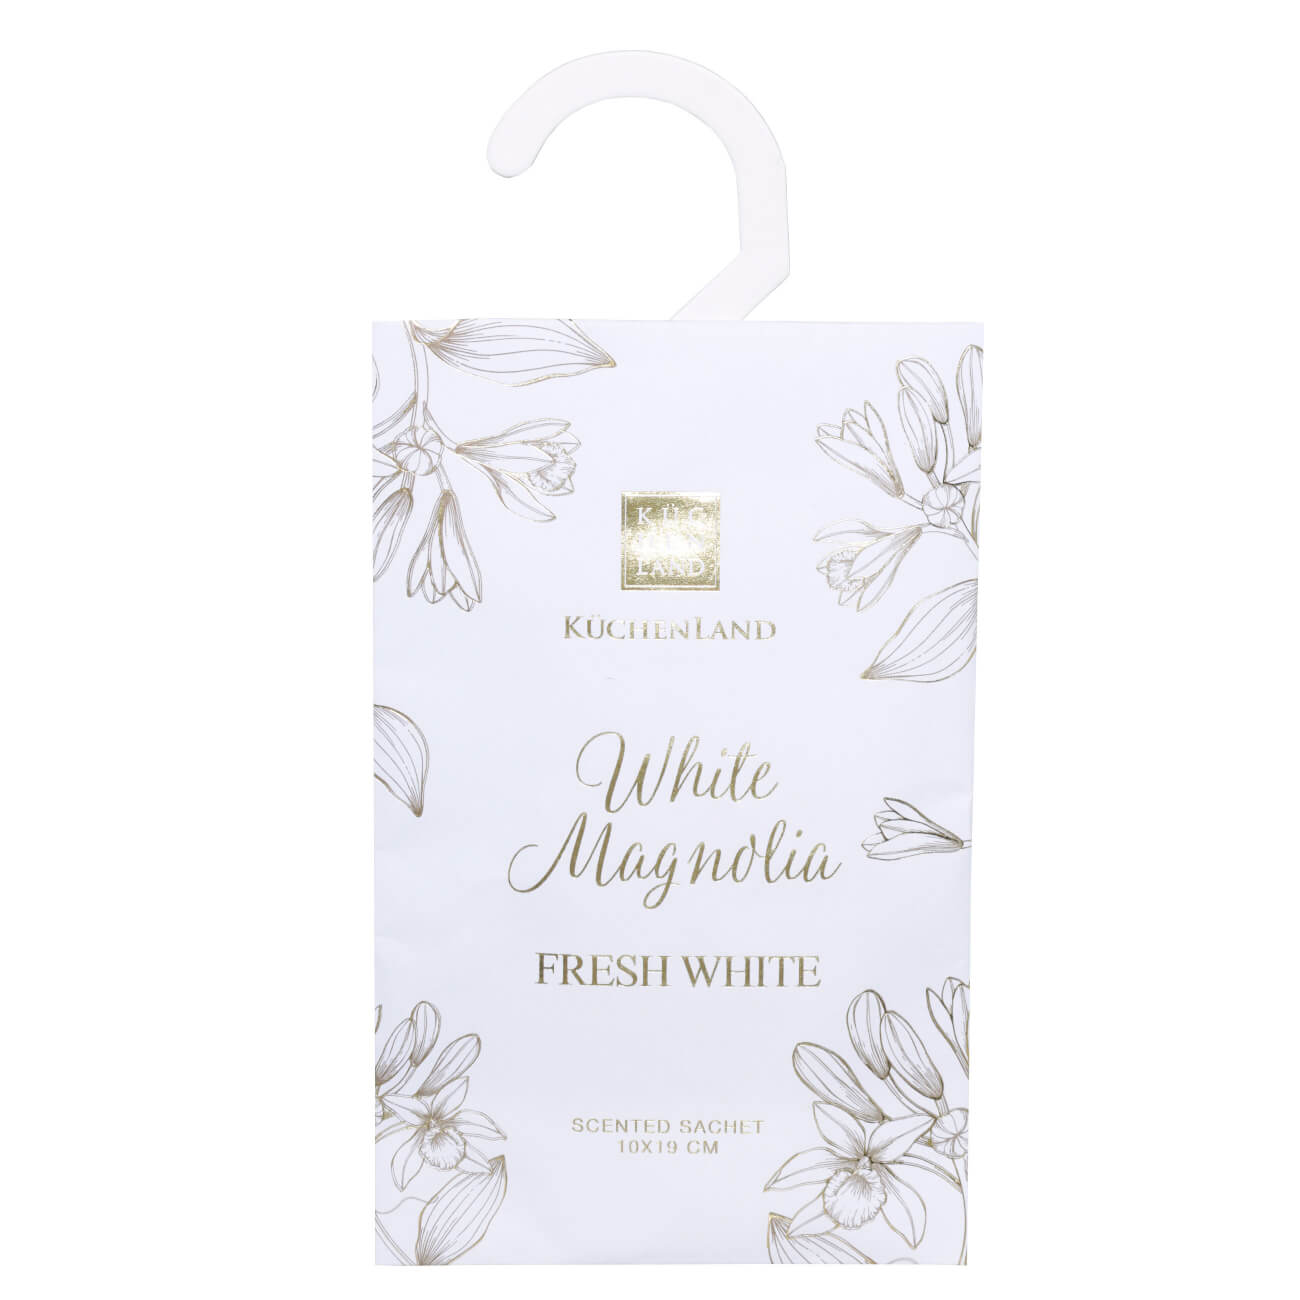 саше ароматическое 10х19 см bergamot lemon fresh white Саше ароматическое, 10х19 см, подвесное, White Magnolia, Fresh white